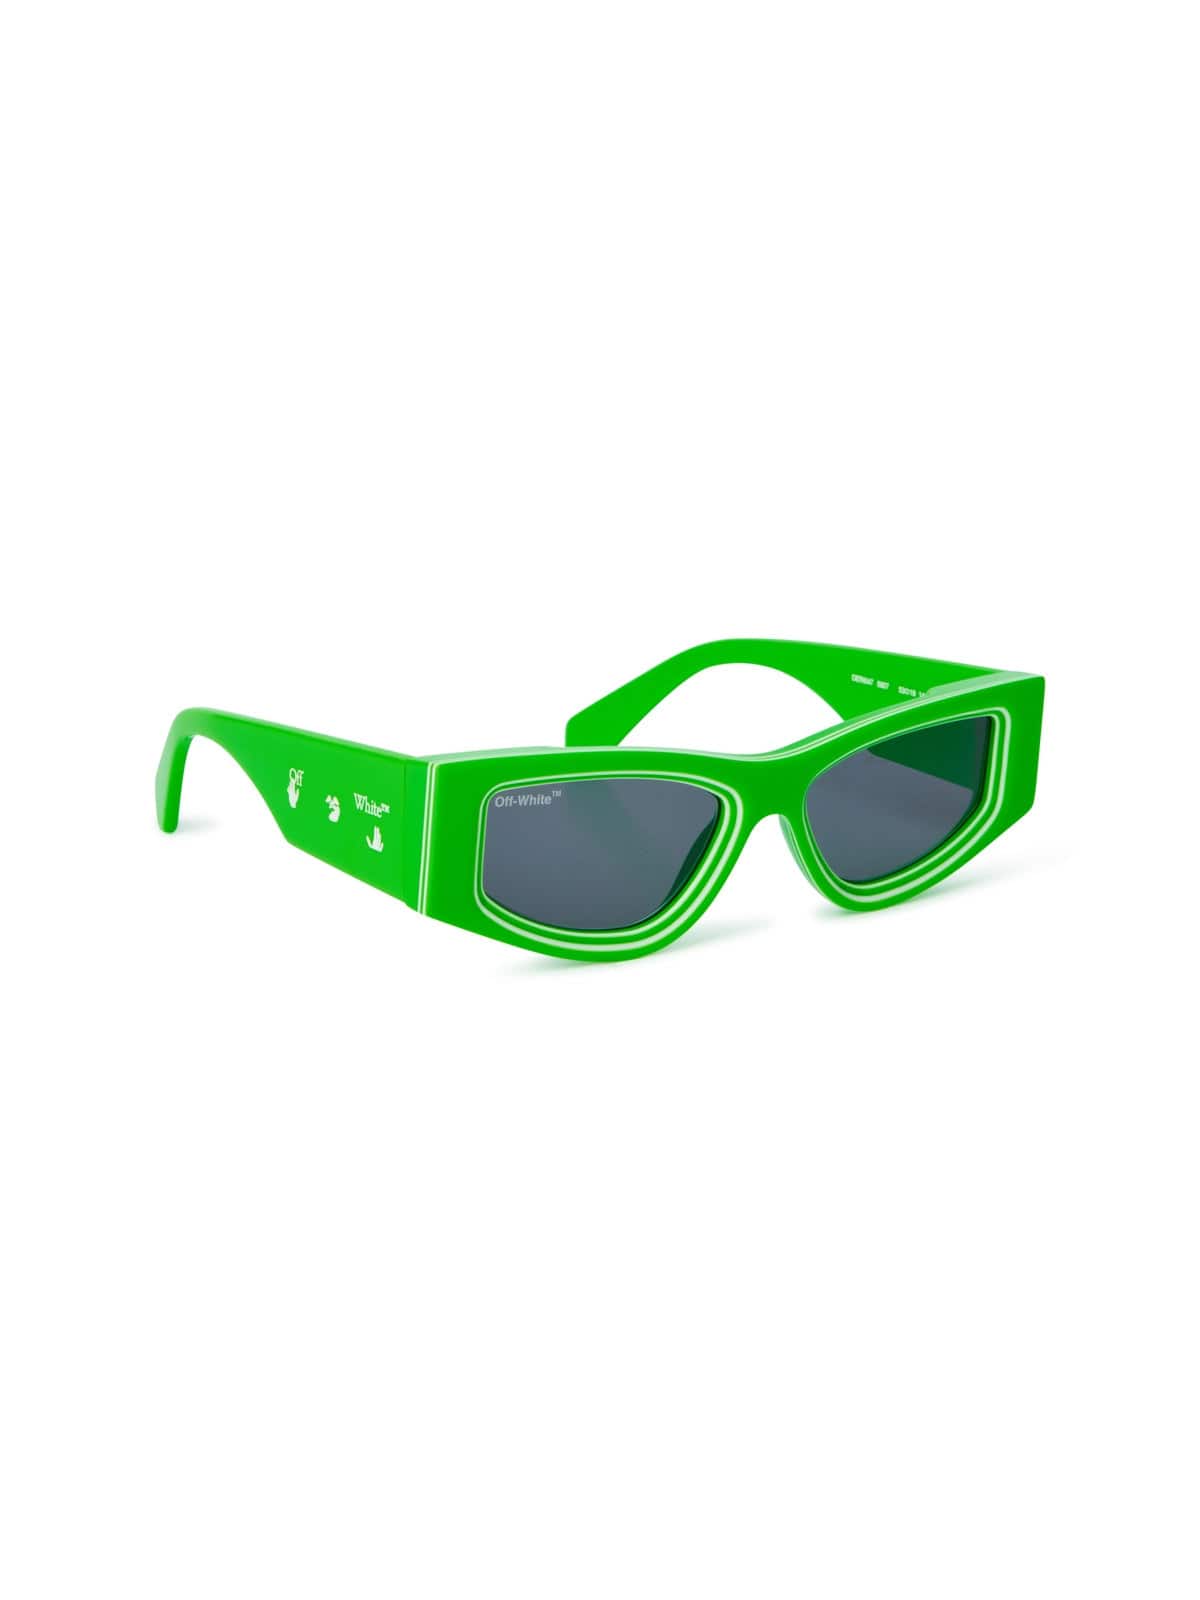 green sunglasses clipart black